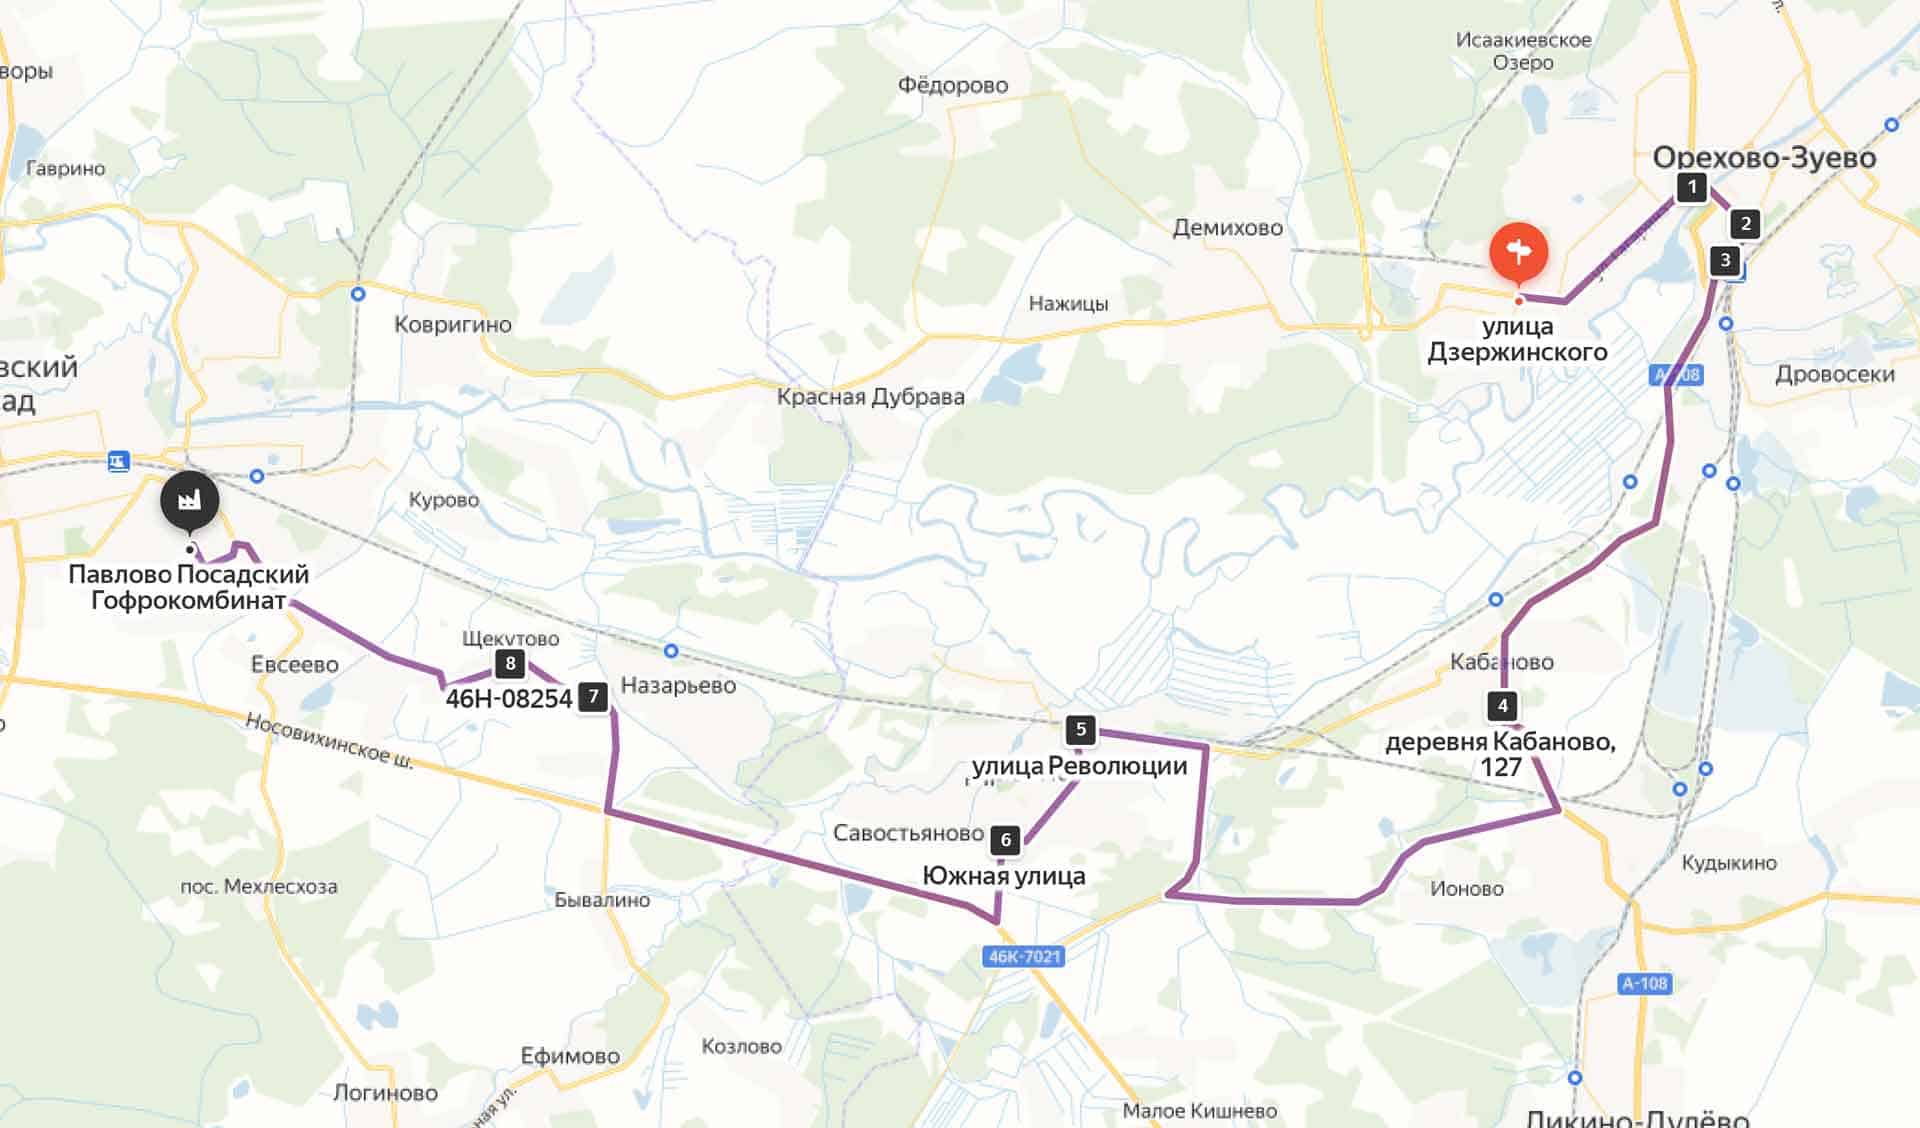 Схема проезда на Павлово-Посадский гофрокомбинат из Орехово-Зуево